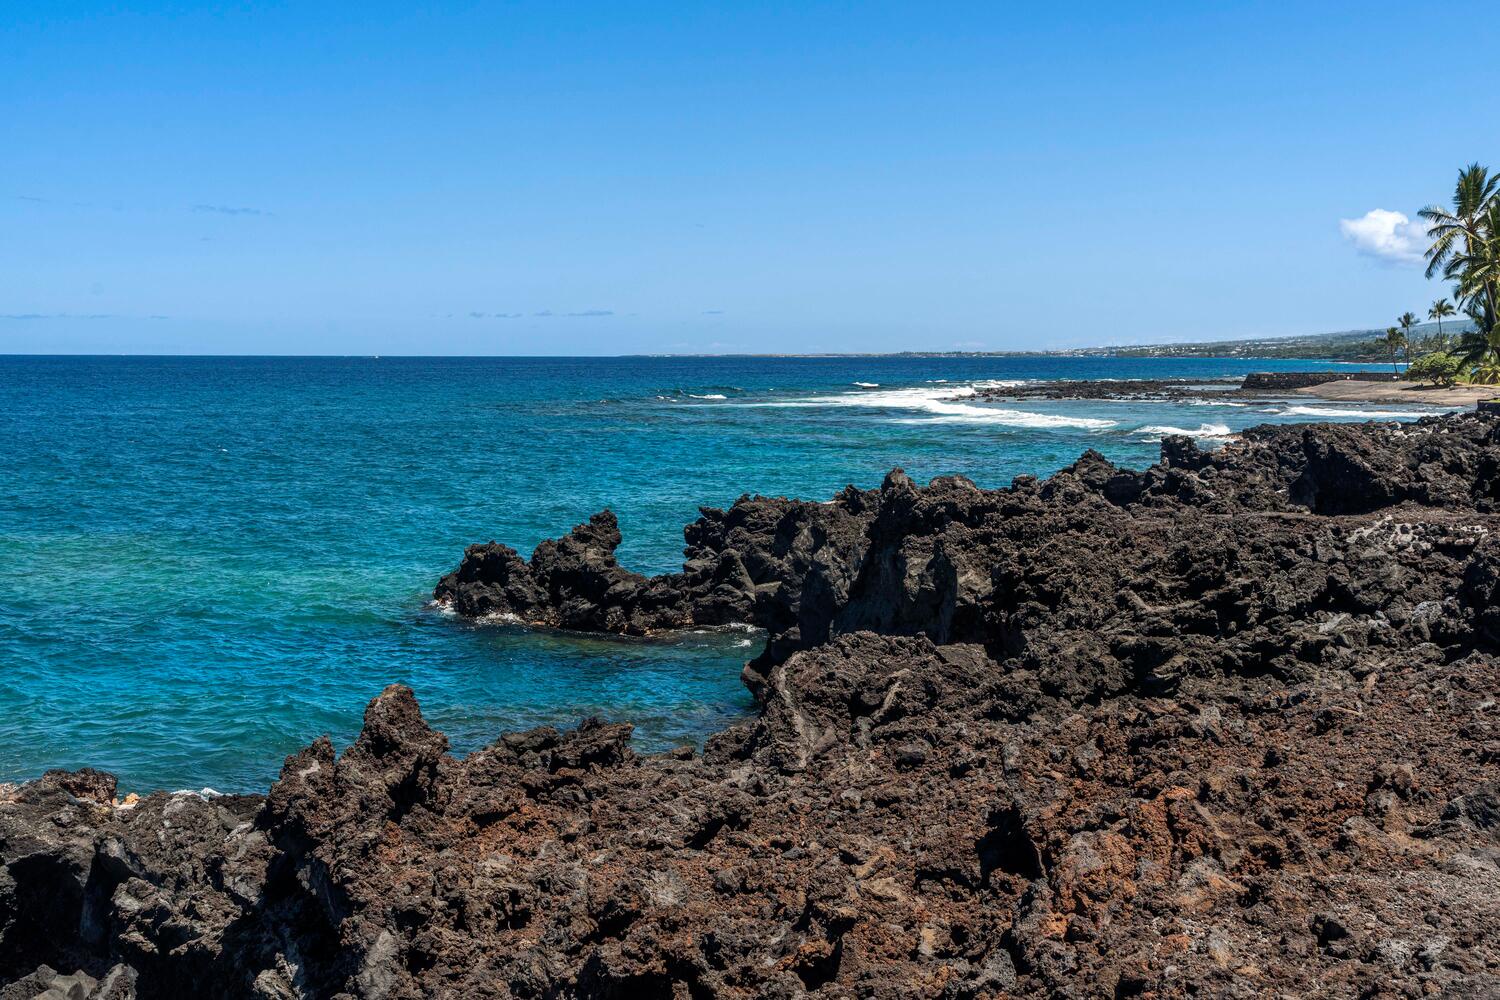 Kailua Kona Vacation Rentals, Keauhou Kona Surf & Racquet 1104 - More Ocean Views!